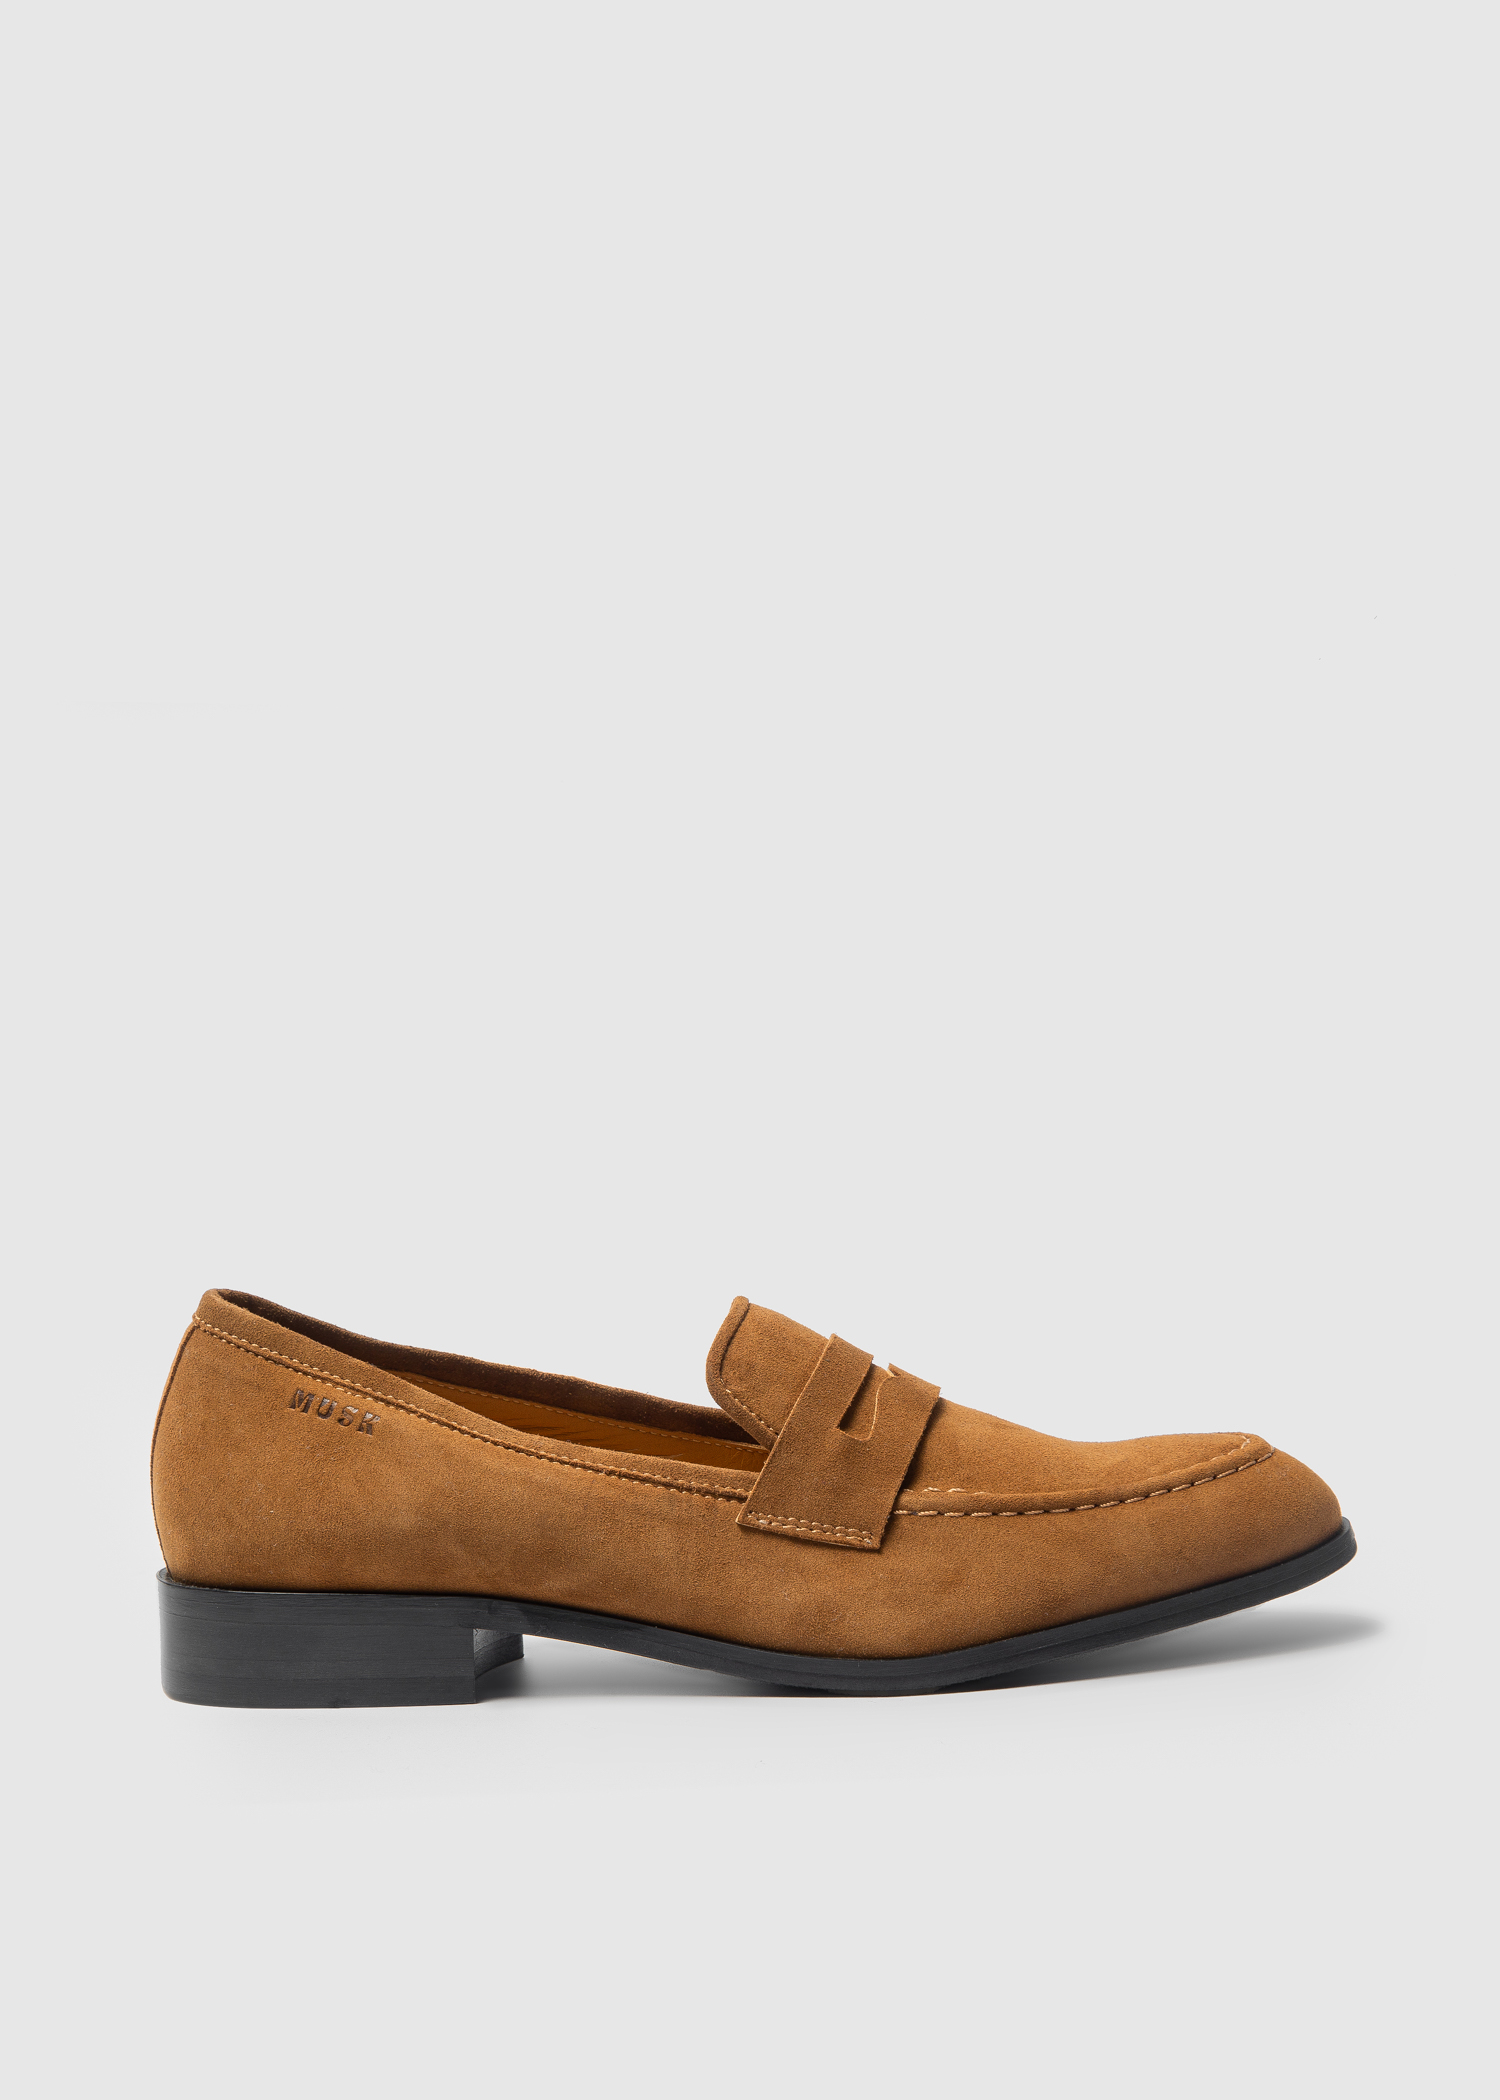 Simple polished loafers (Kopia)